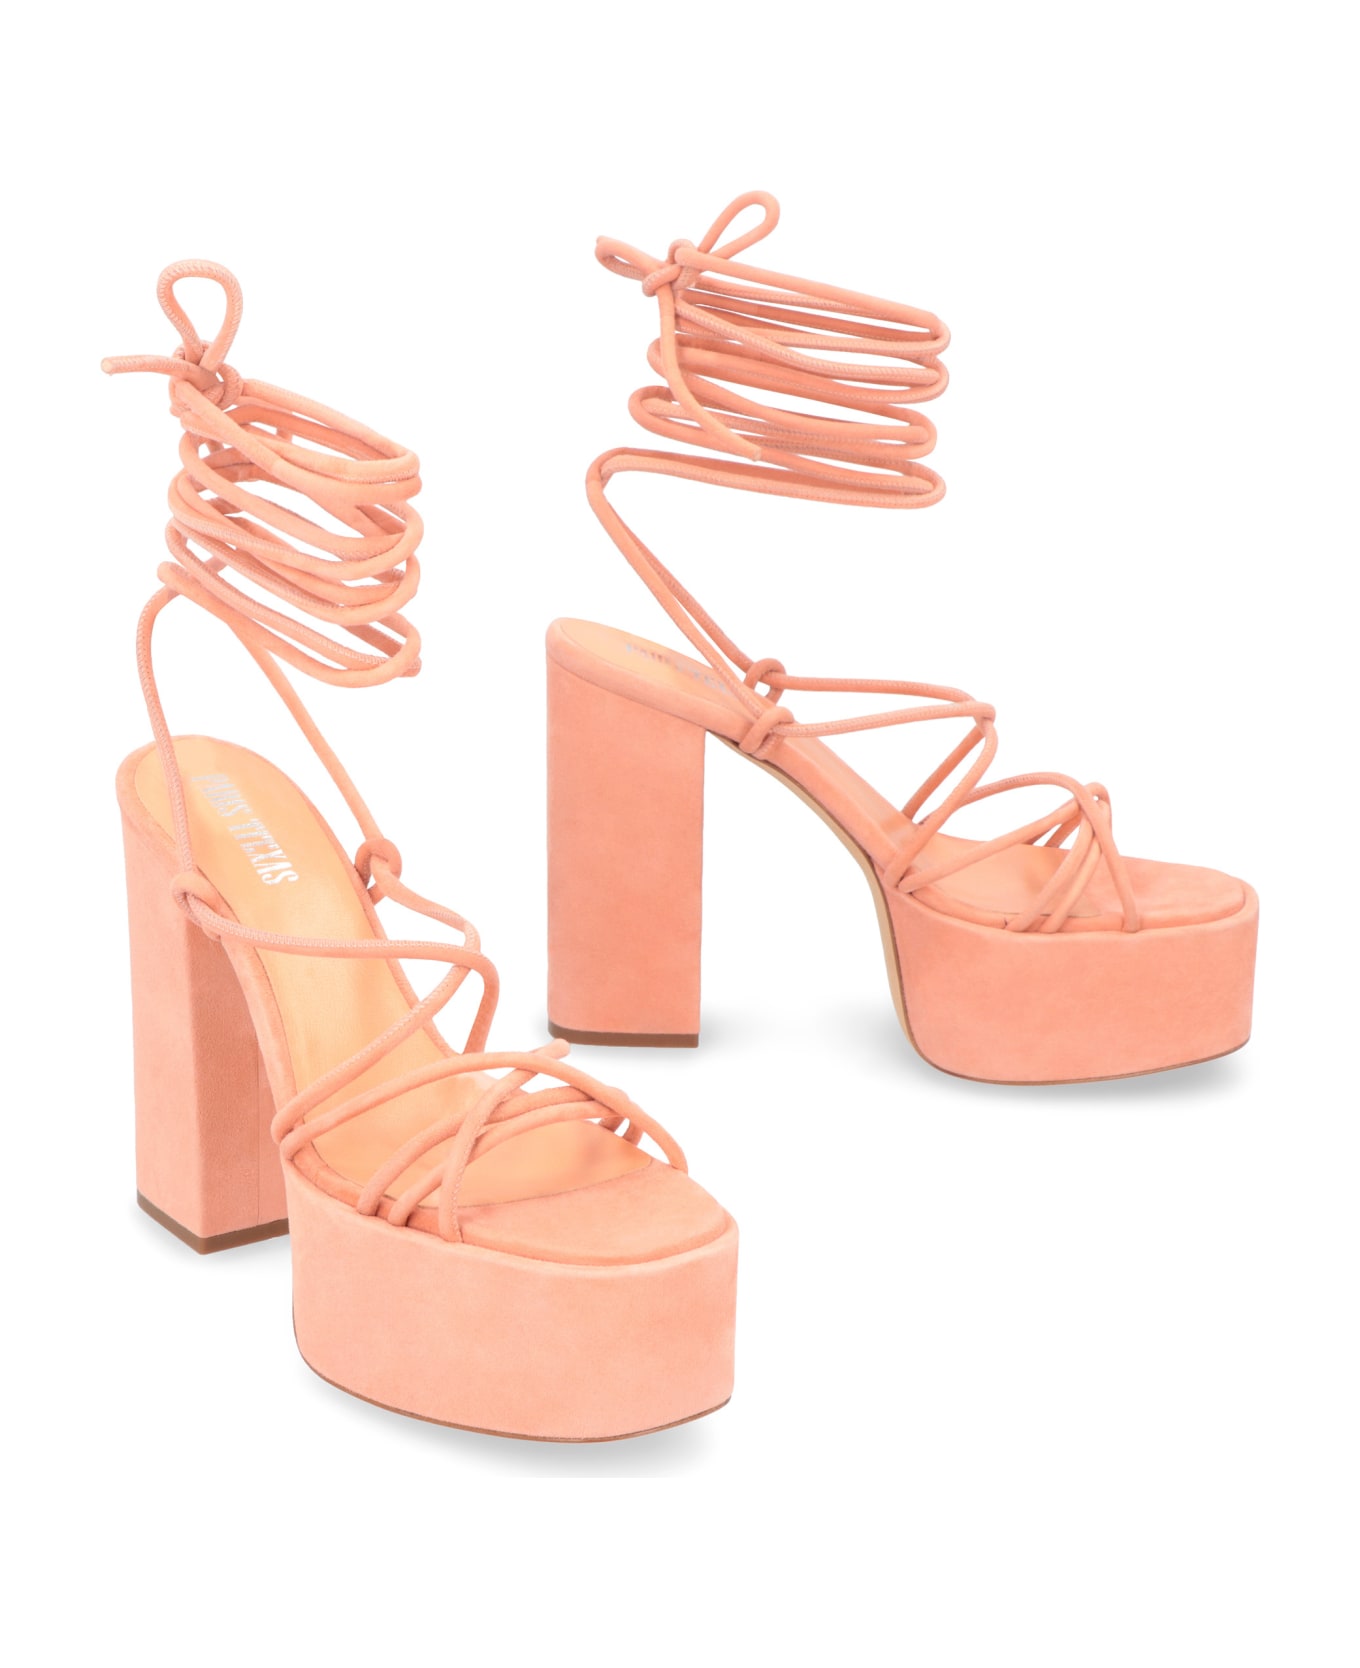 Paris Texas Malena Suede Sandals - Pink